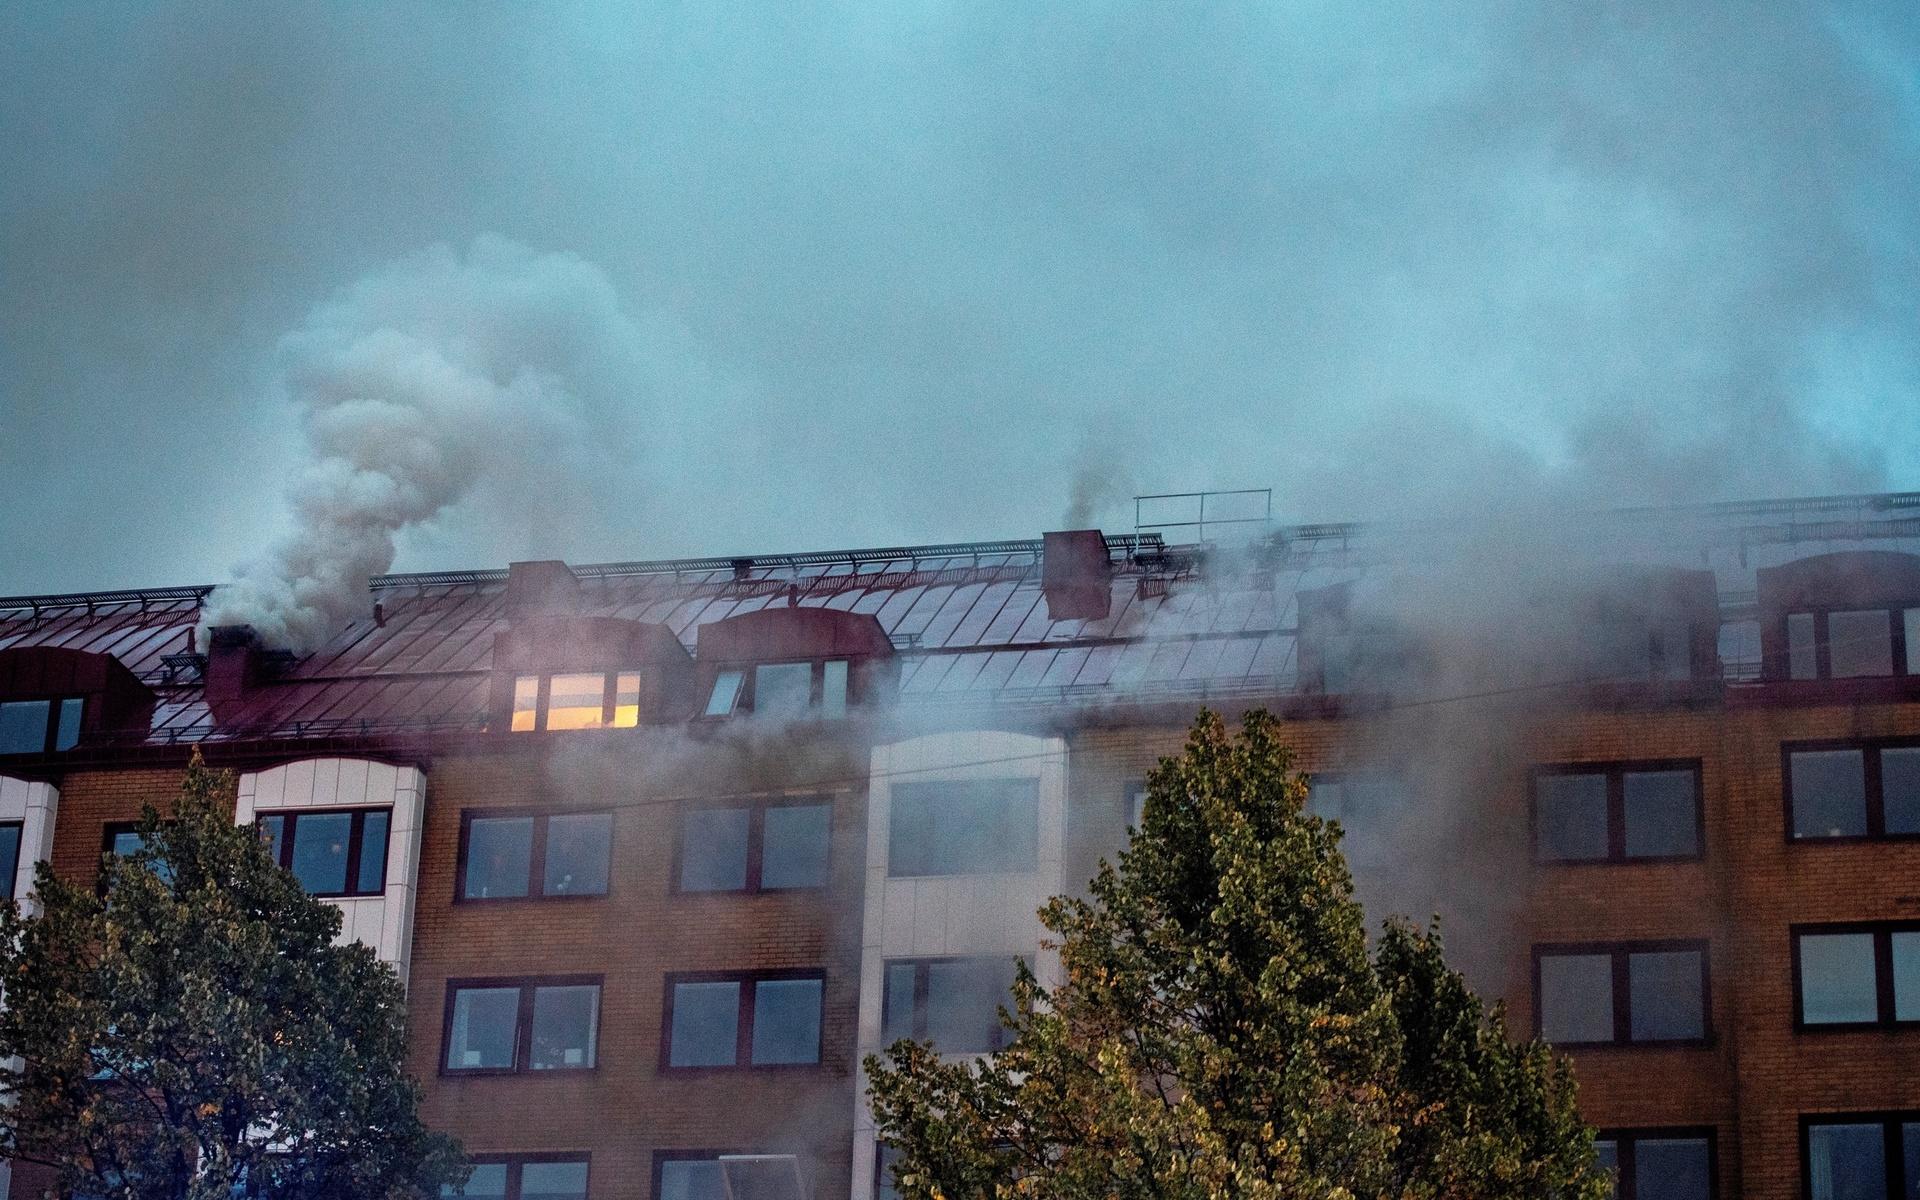 Explosionen orsakade en kraftig brand i ett lägenhetshus i Annedal i centrala Göteborg.